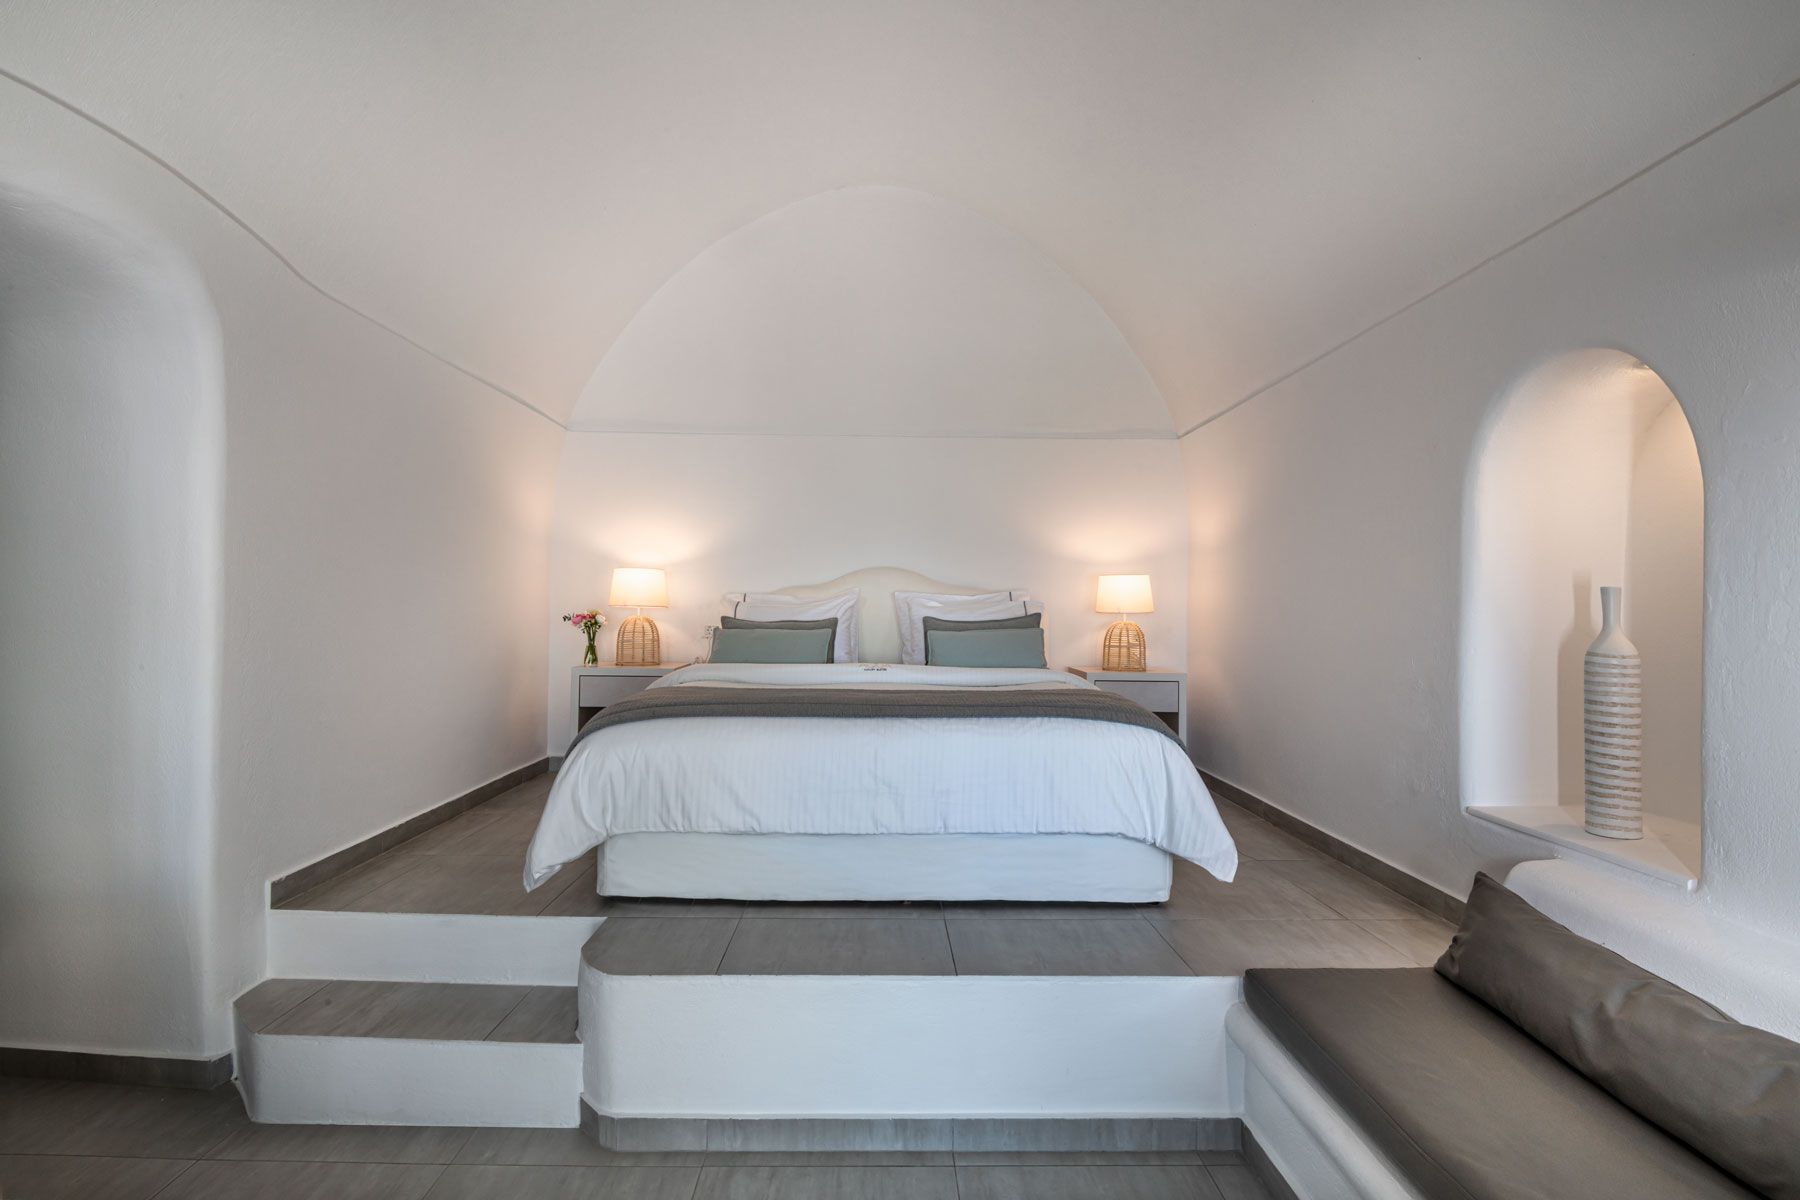 Aqua luxury suites Σουίτες στην Σαντορίνη Ημεροβίγλι, Εσωτερικός & Αρχιτεκτονικός σχεδιασμός πολυτελών σουιτών με ιδιωτική πισίν